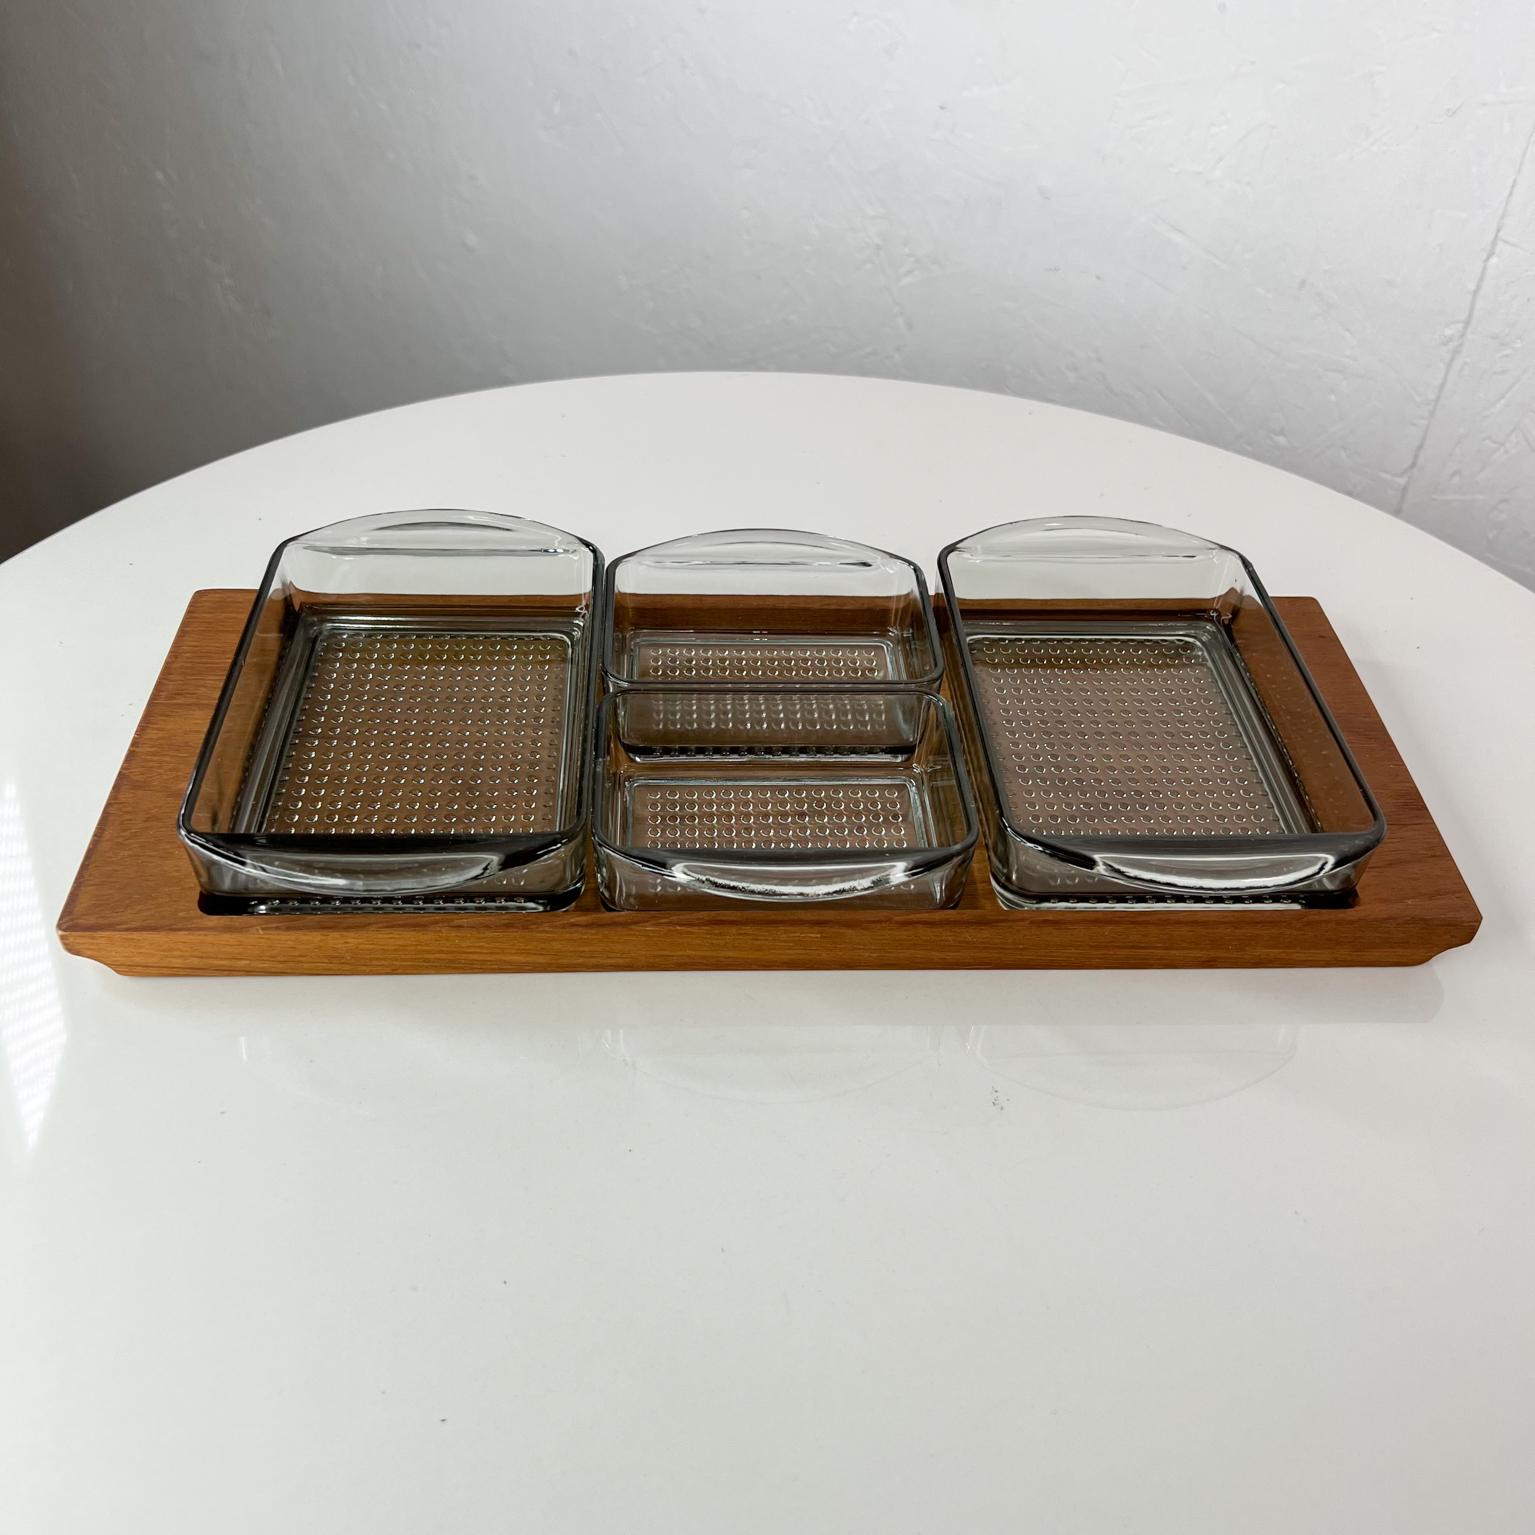 1960s Denmark serving snack tray set teak & glass.
Danish modern set produced by Lüthje Wood Denmark 1 maker stamped.
Measures: 6.38 wide x 13.75 deep x 1.75 tall
Original vintage unrestored condition.
Refer to images.
 